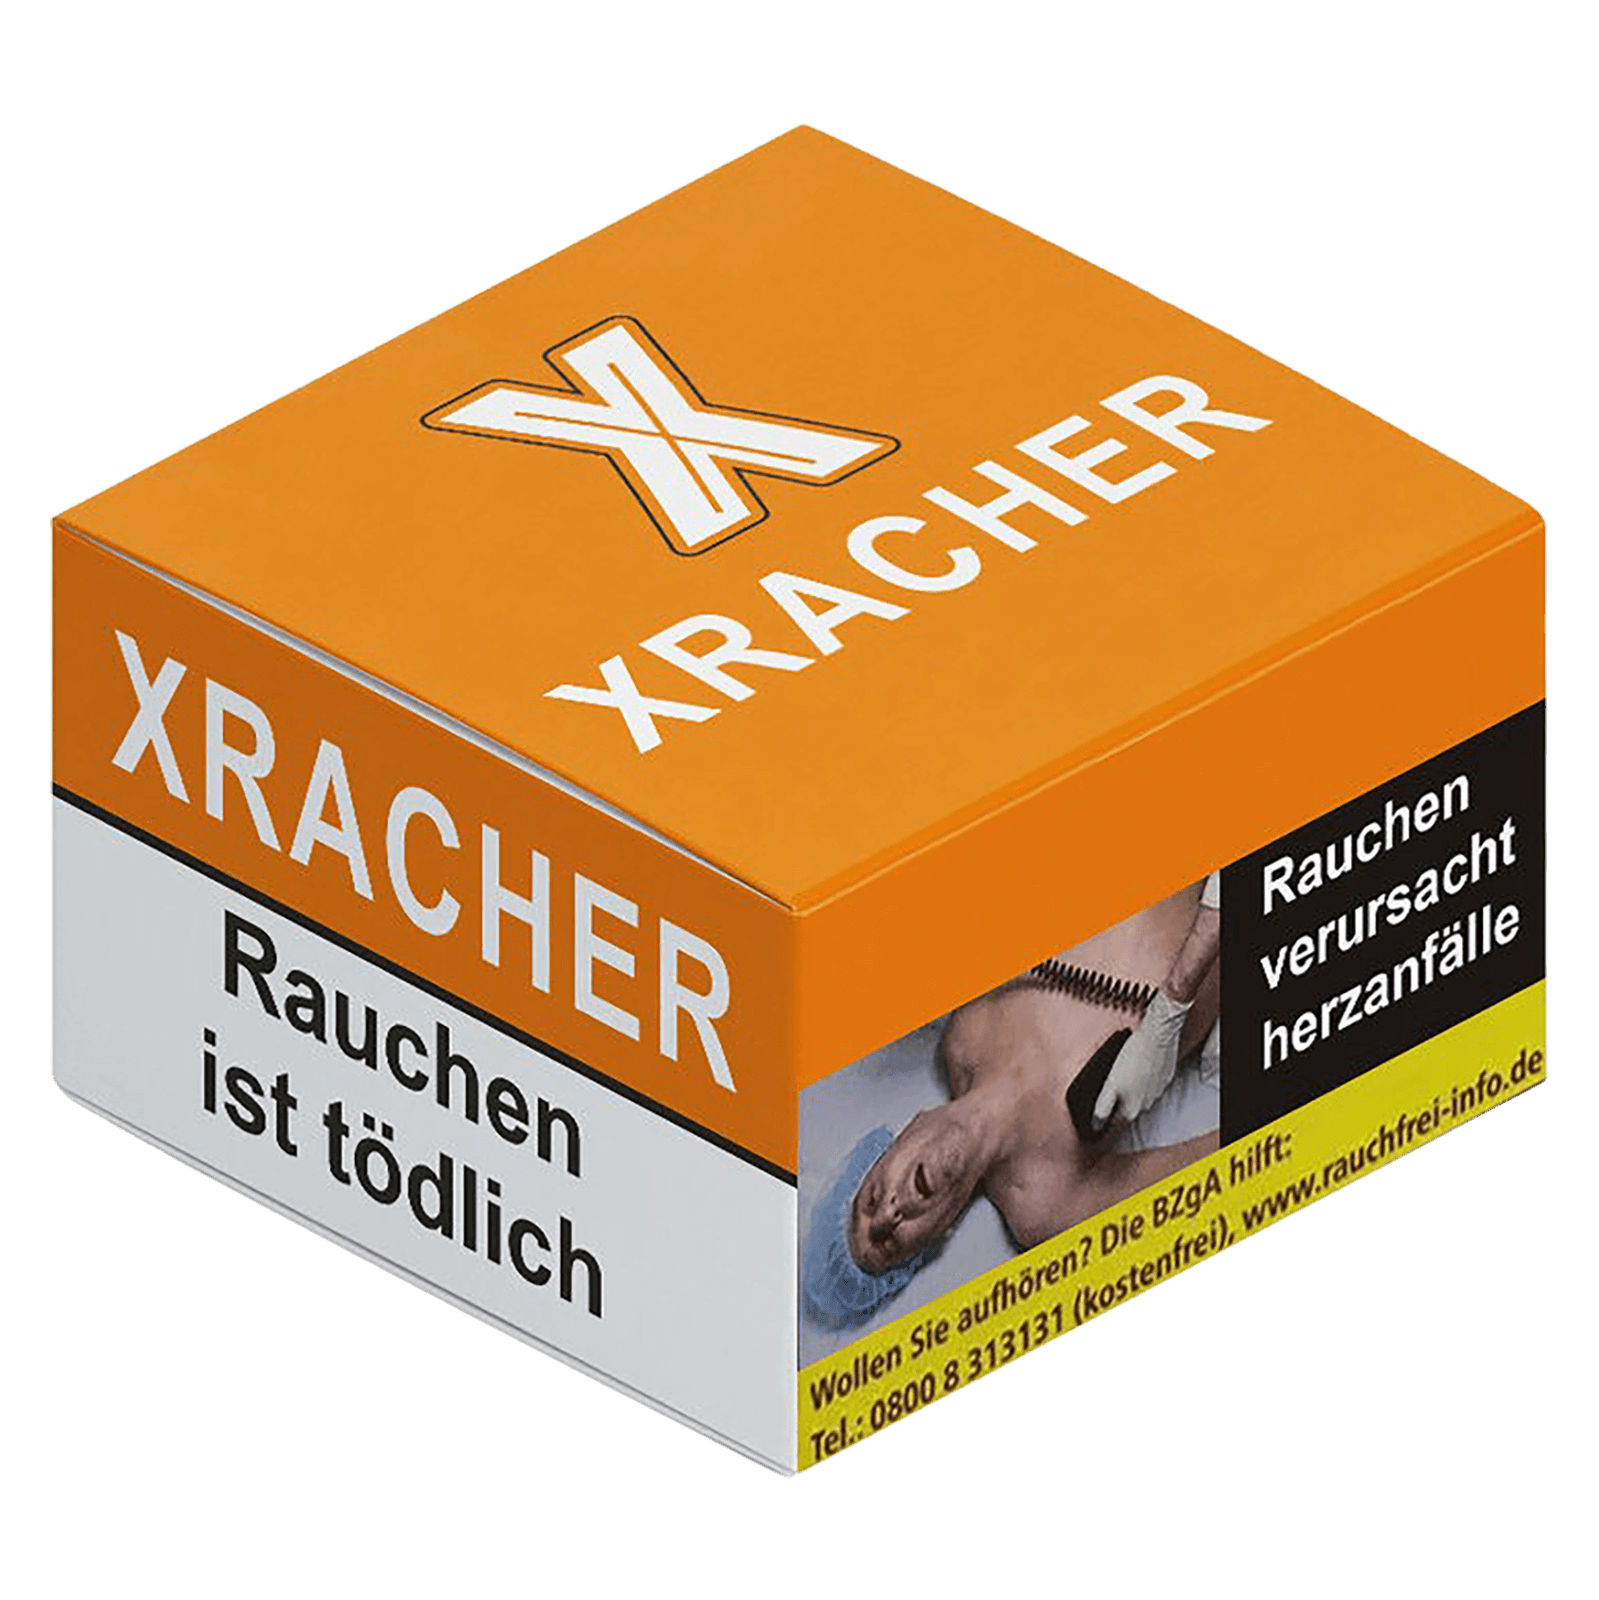 Xracher 20g - Icy Cact.